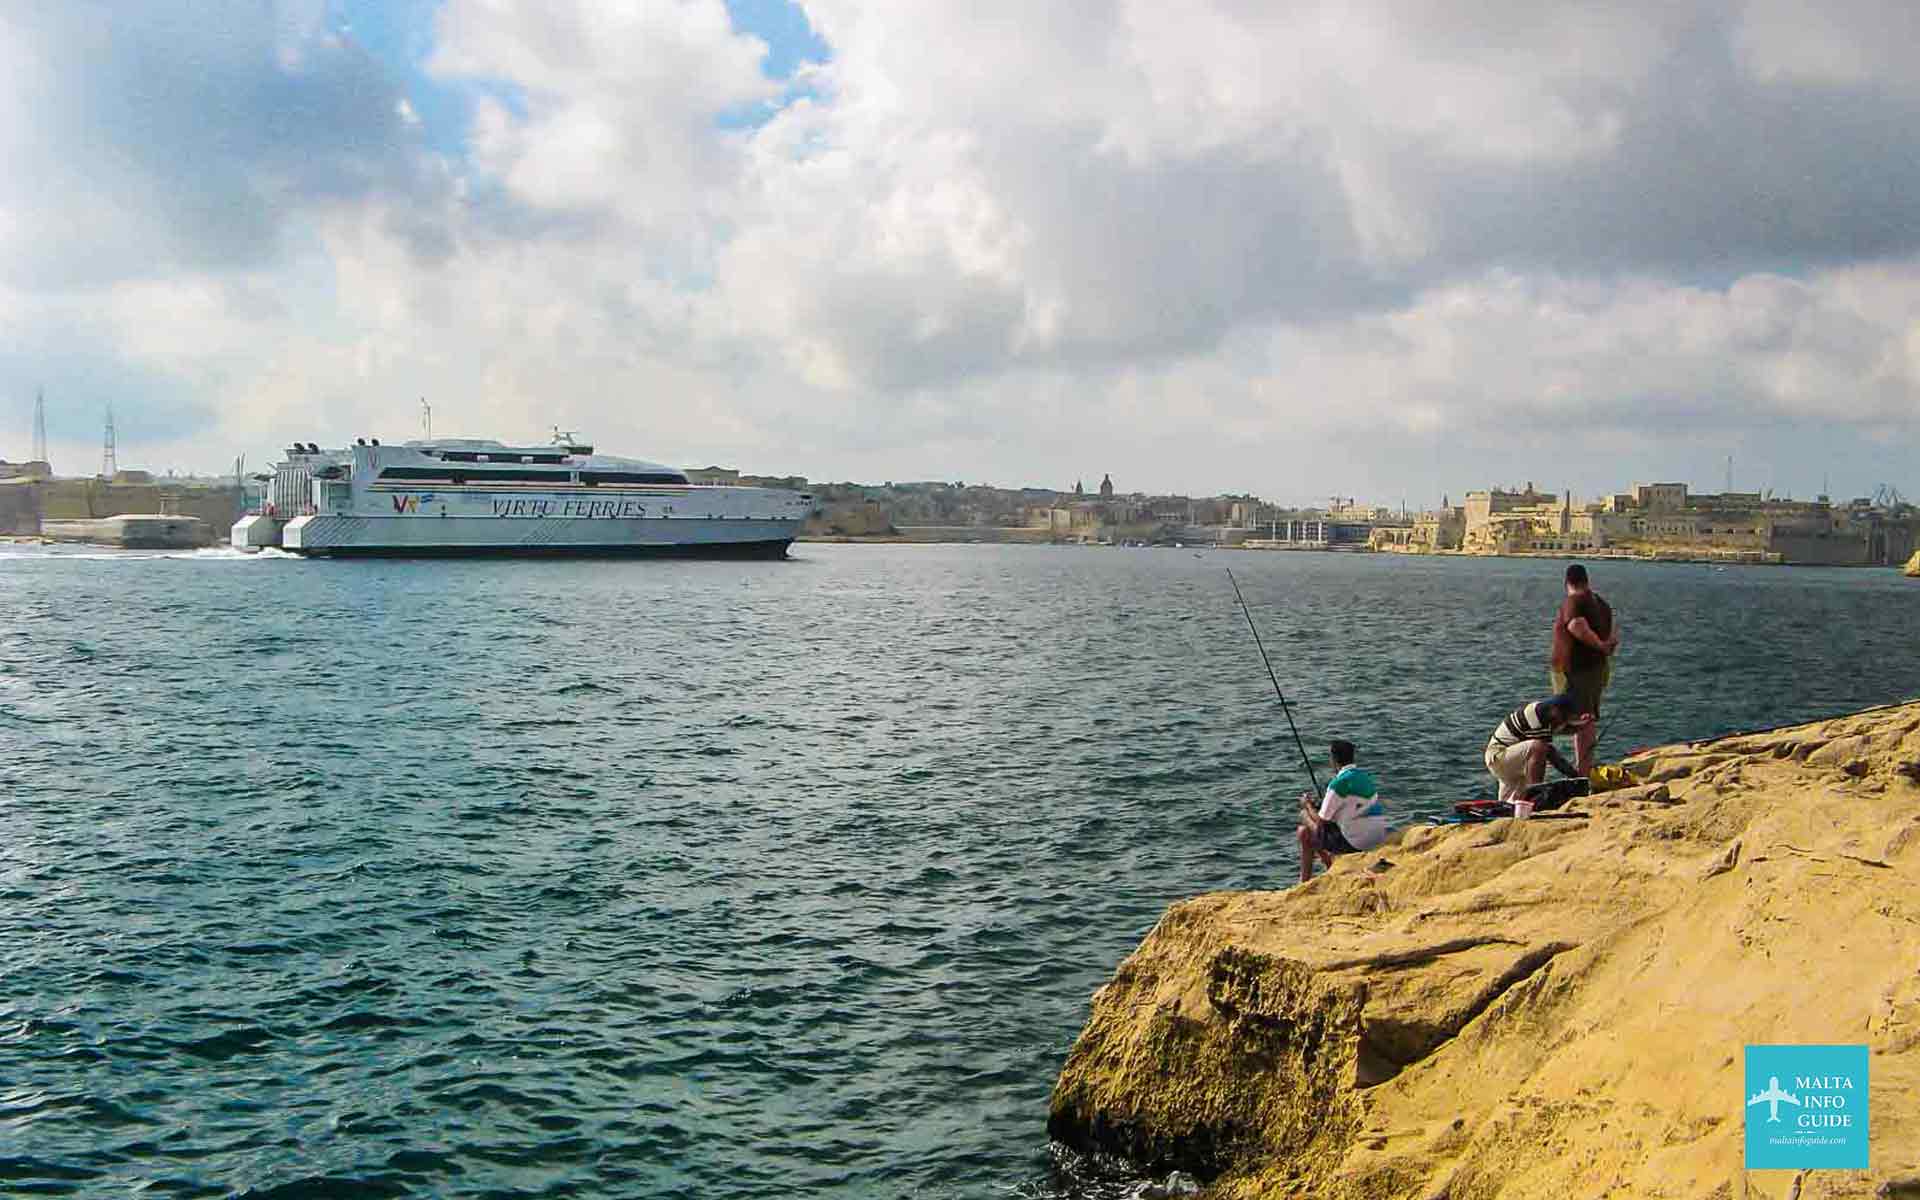 Virtu Ferries is heading towards the Virtu Ferries terminal from Sicily to Malta.